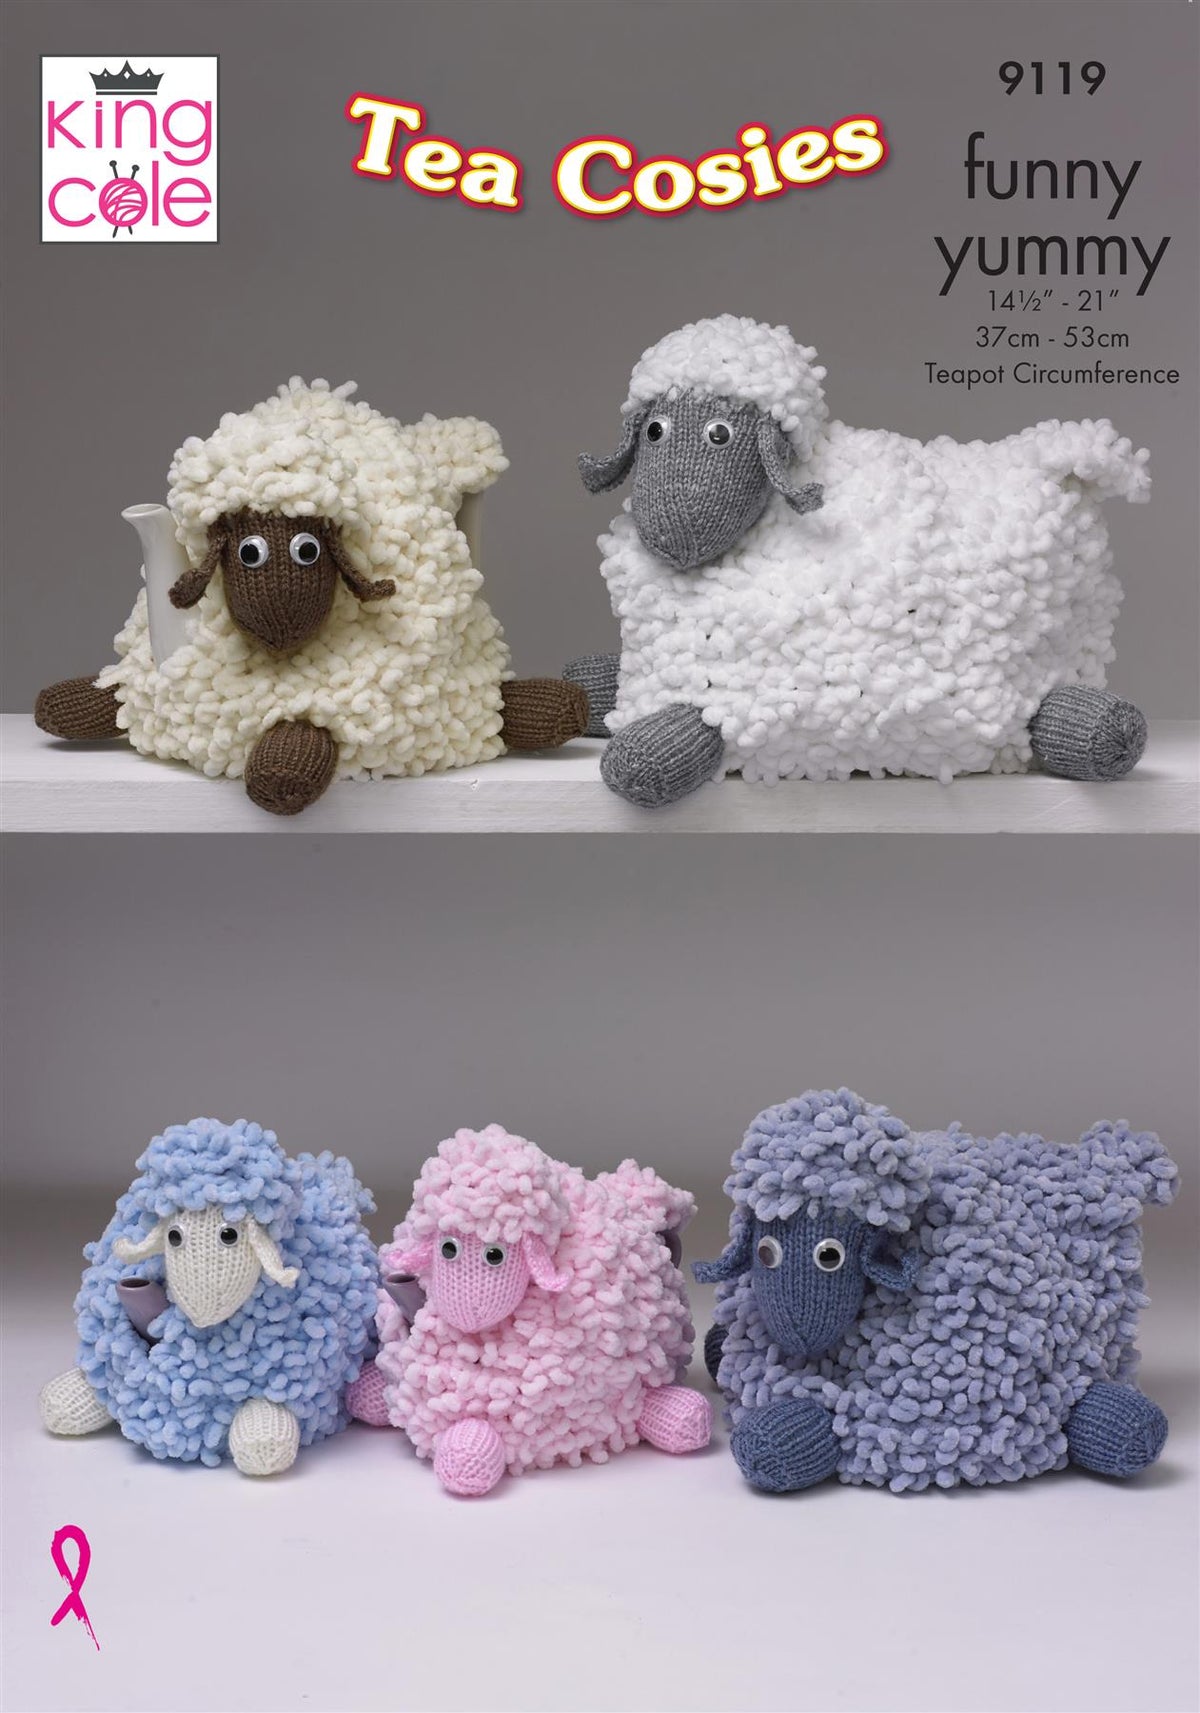 King Cole Funny Yummy knitting pattern (9119) sheep tea cosies